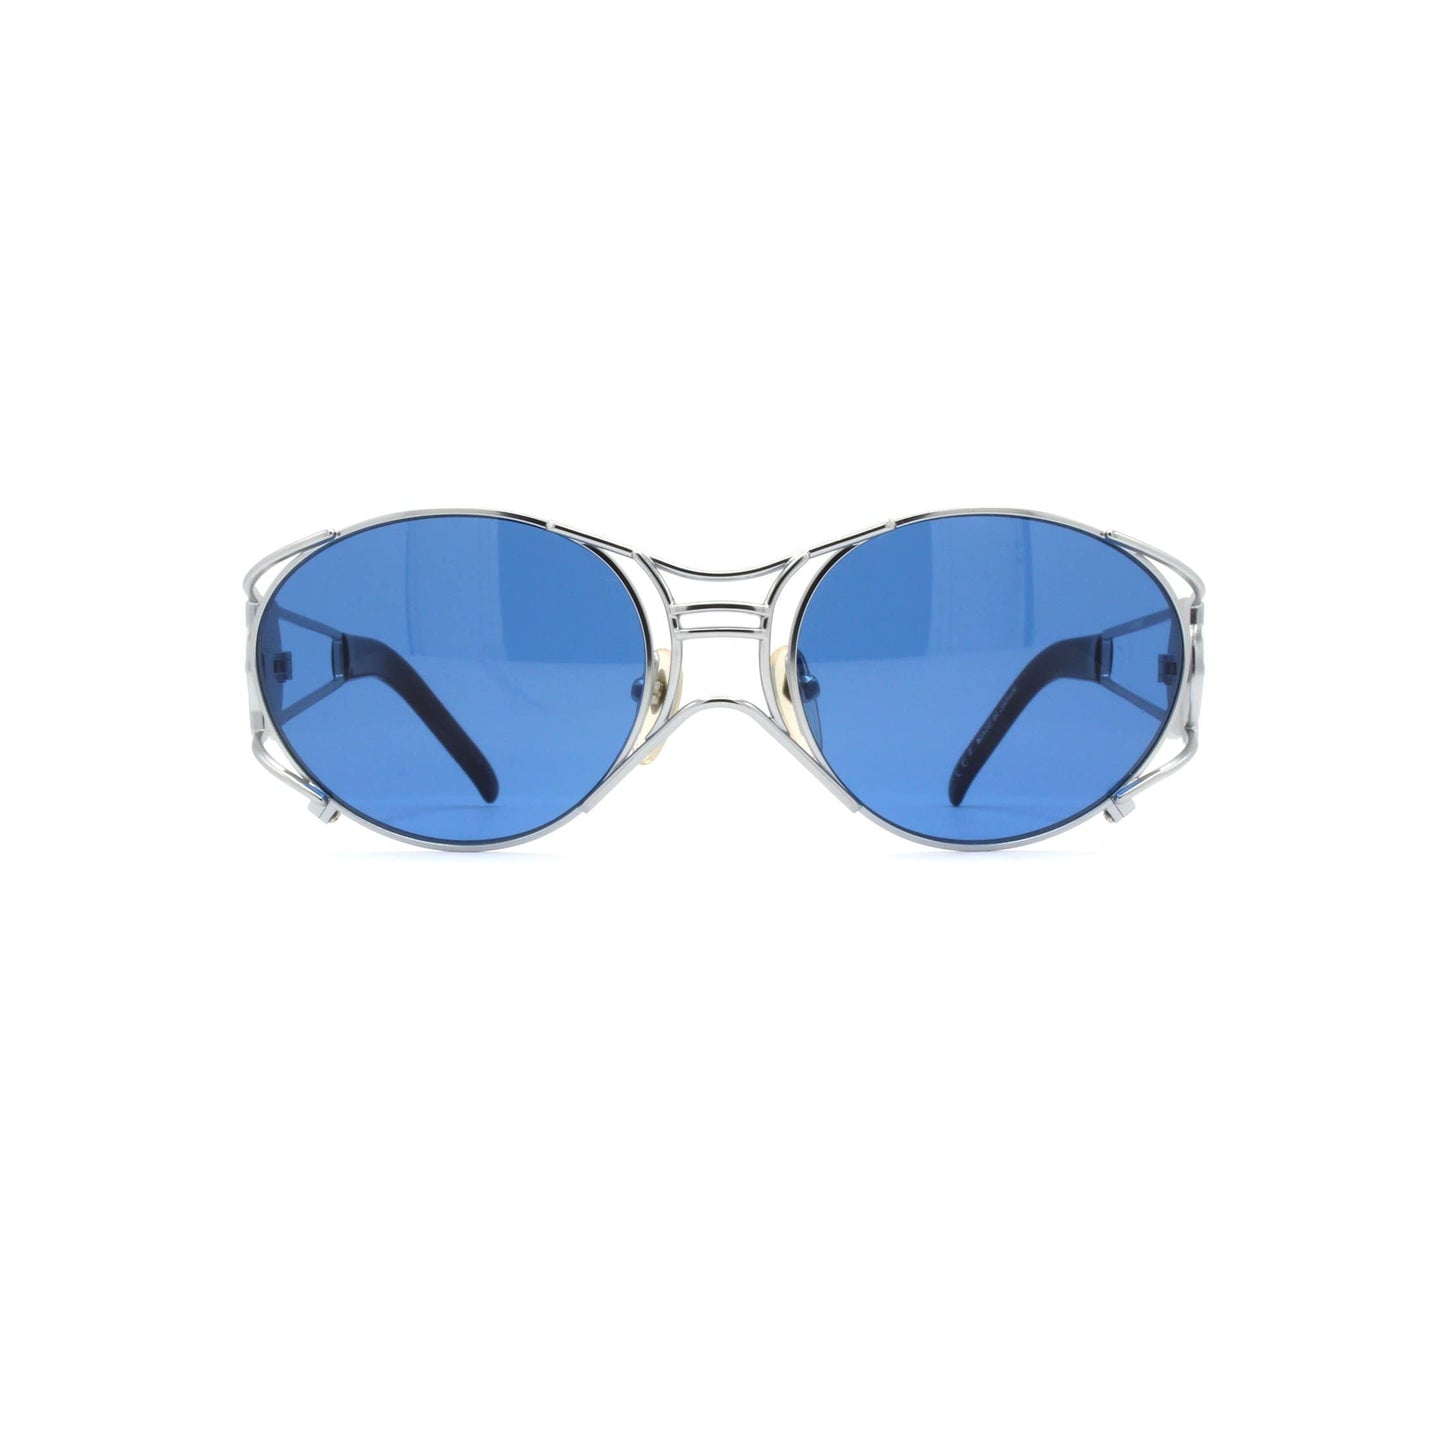 Silver Vintage Jean Paul Gaultier 58-6101 Sunglasses RSTKD Vintage